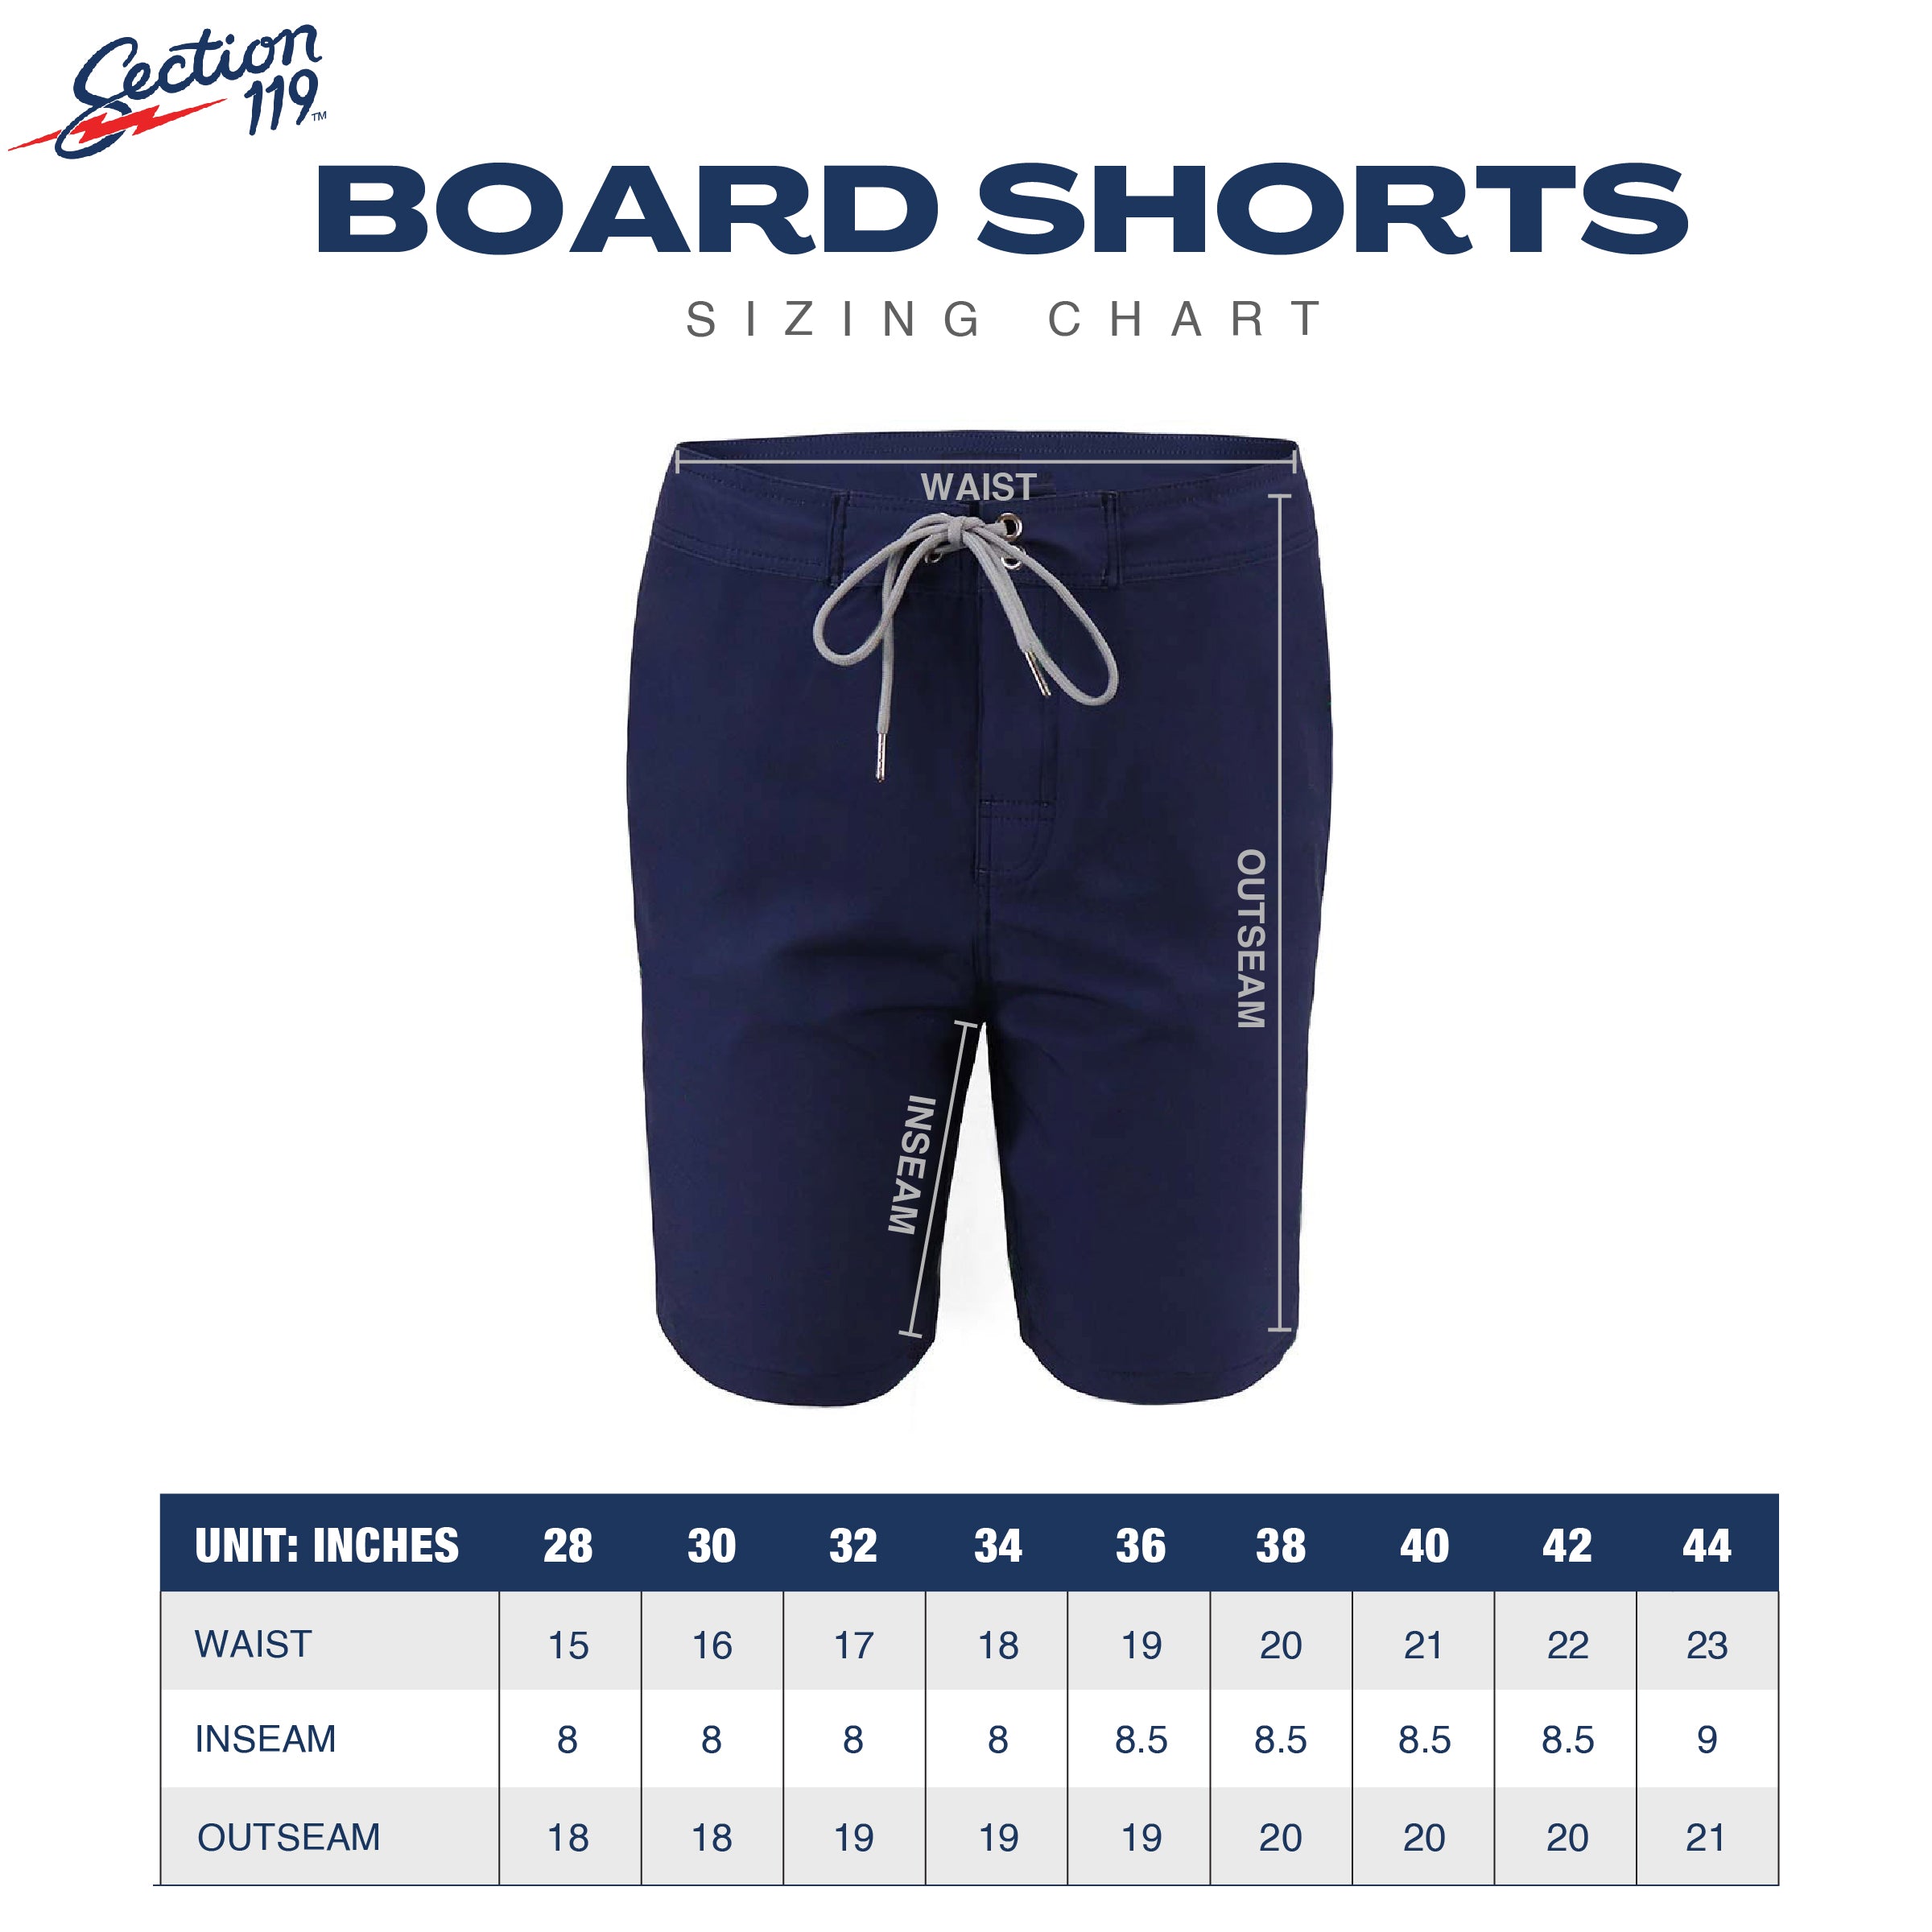 Phish Board Shorts Green - Section 119